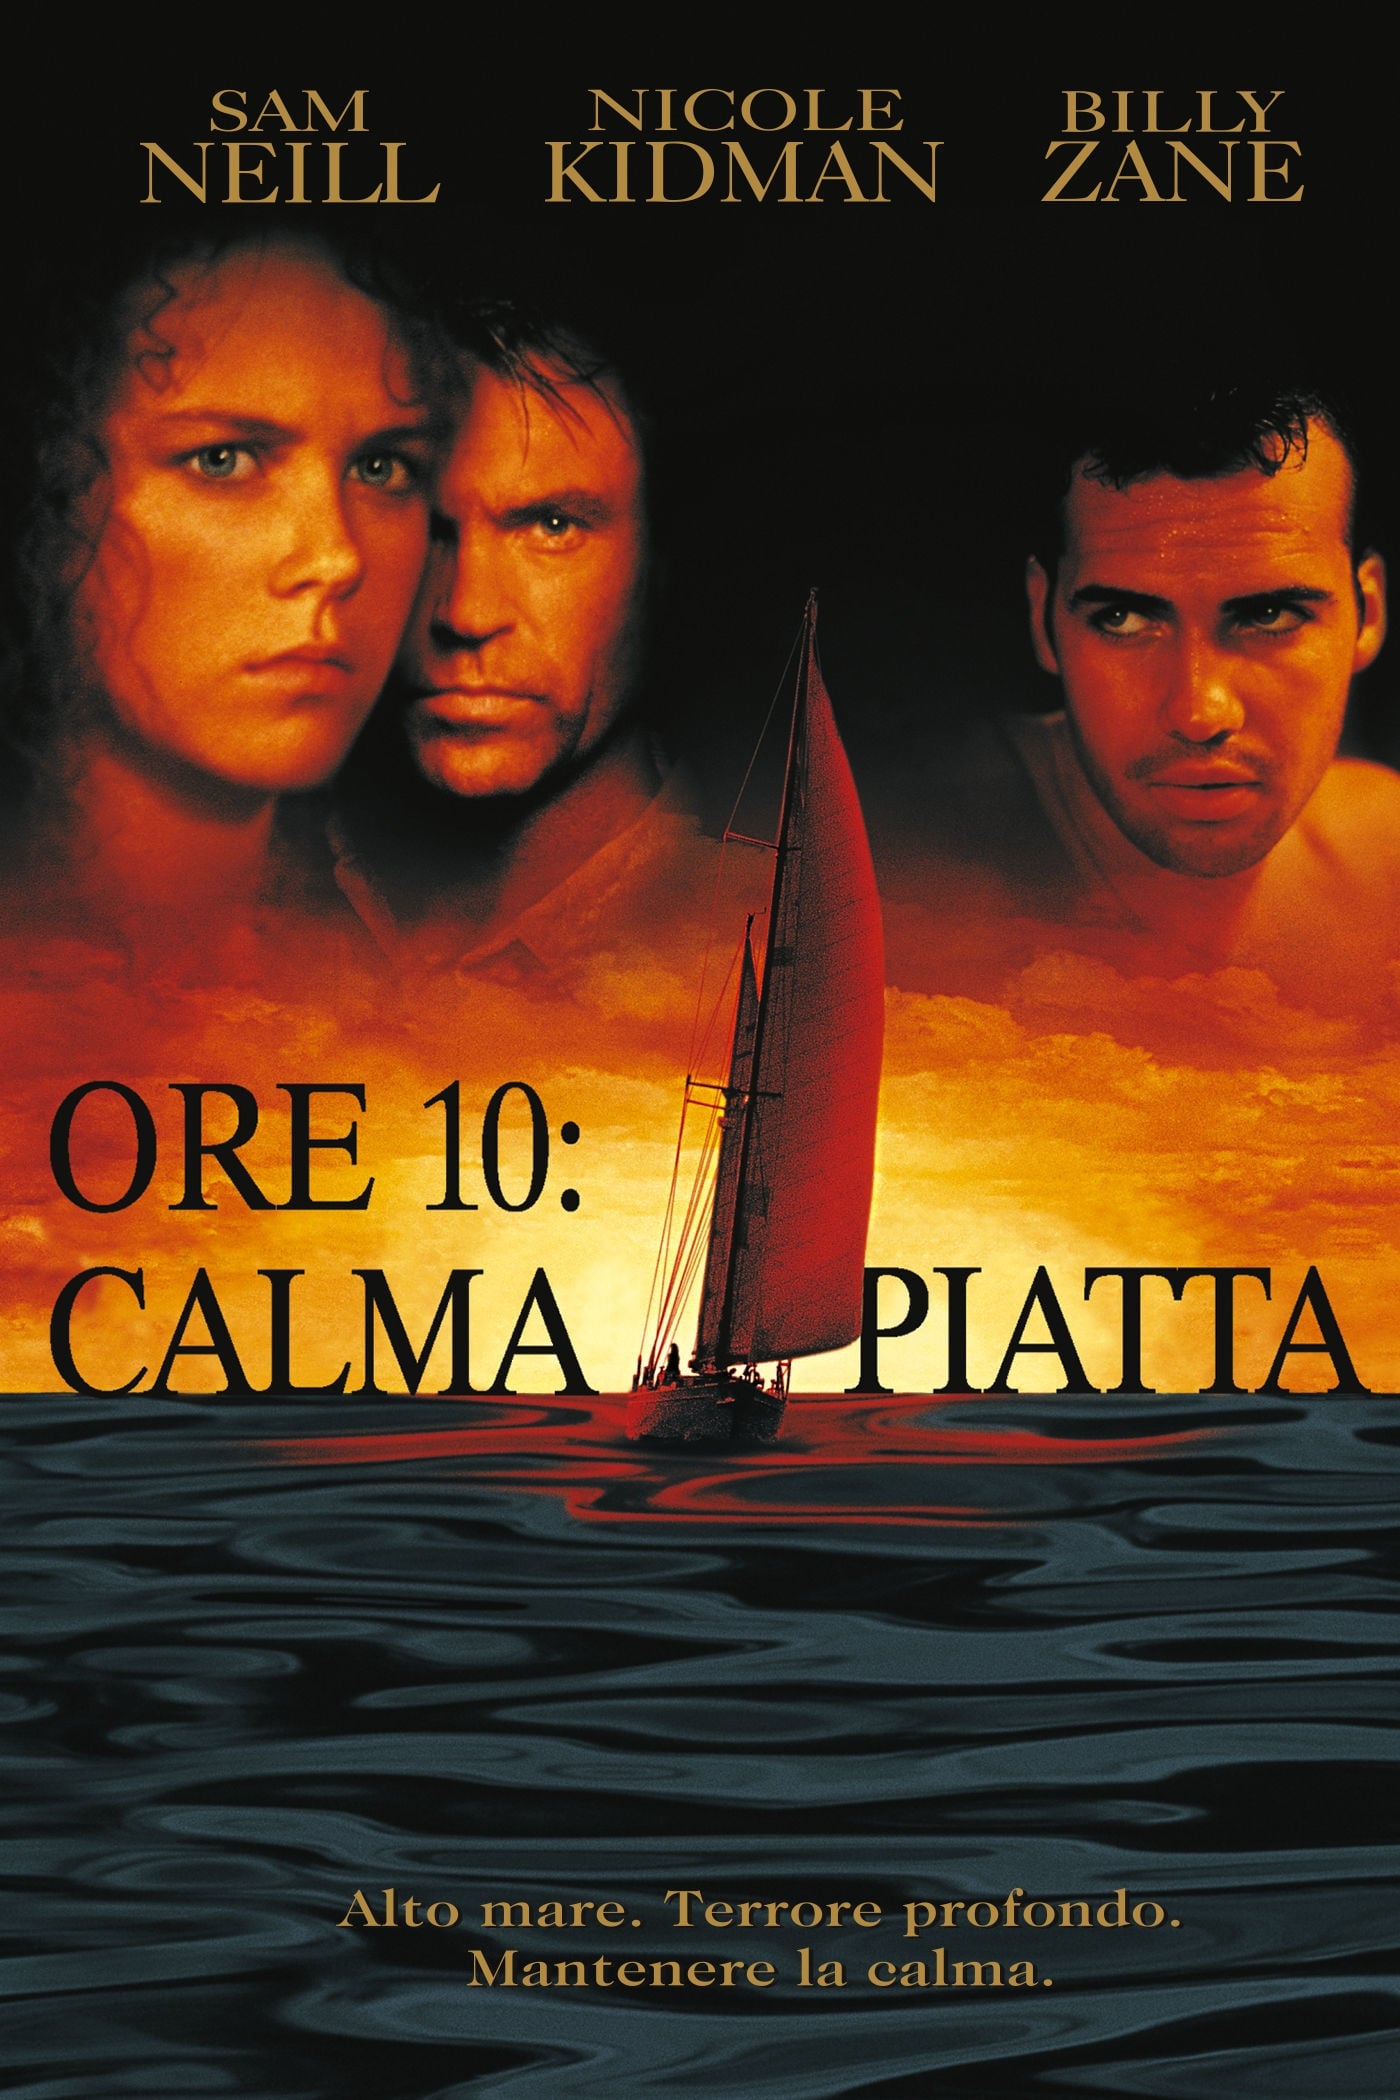 Ore 10: Calma piatta [HD] (1989)